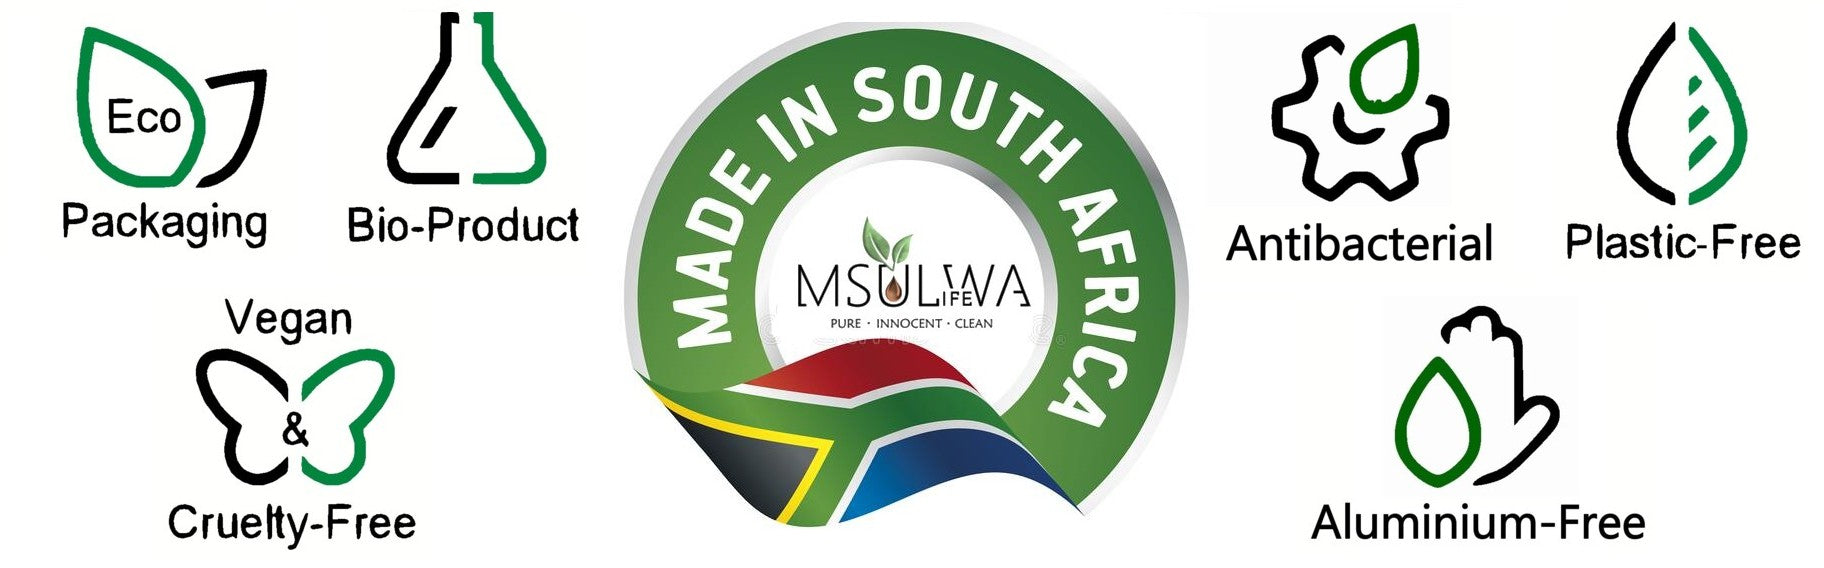 Msulwa Life natural, vegan, eco-friendly deodorant